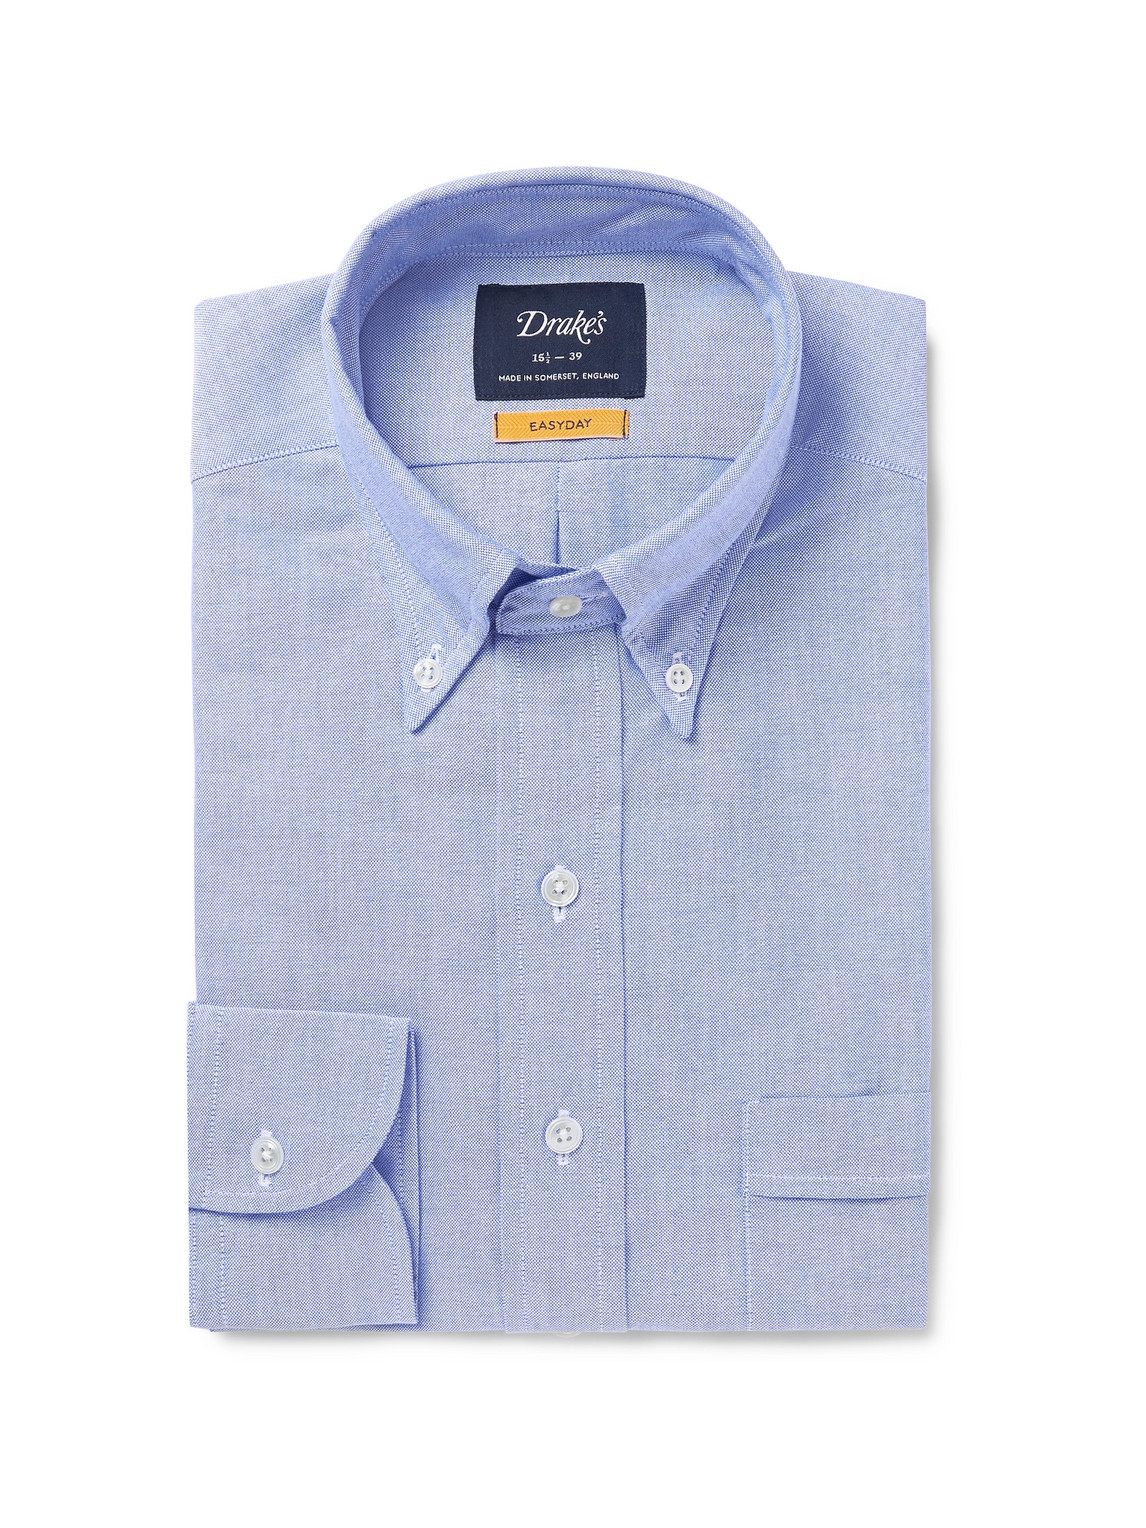 Blue Button-Down Collar Cotton Oxford Shirt